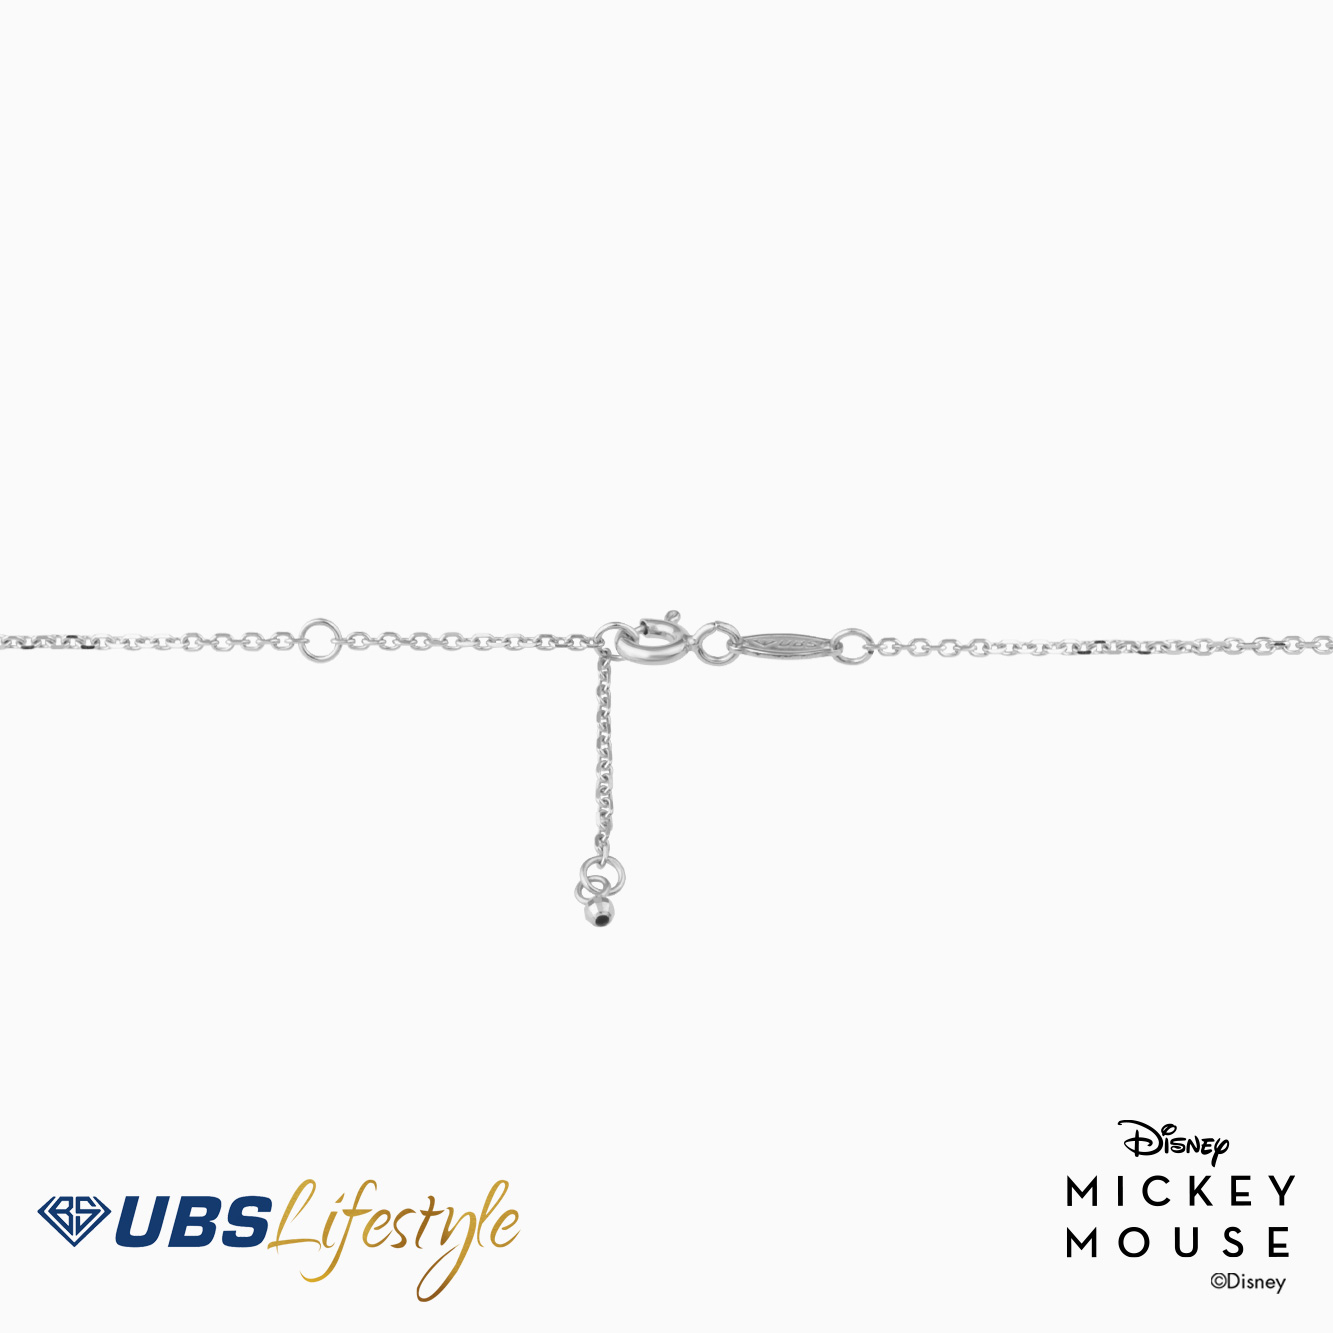 UBS Kalung Emas Disney Mickey & Minnie Mouse - Kky0044 - 17K